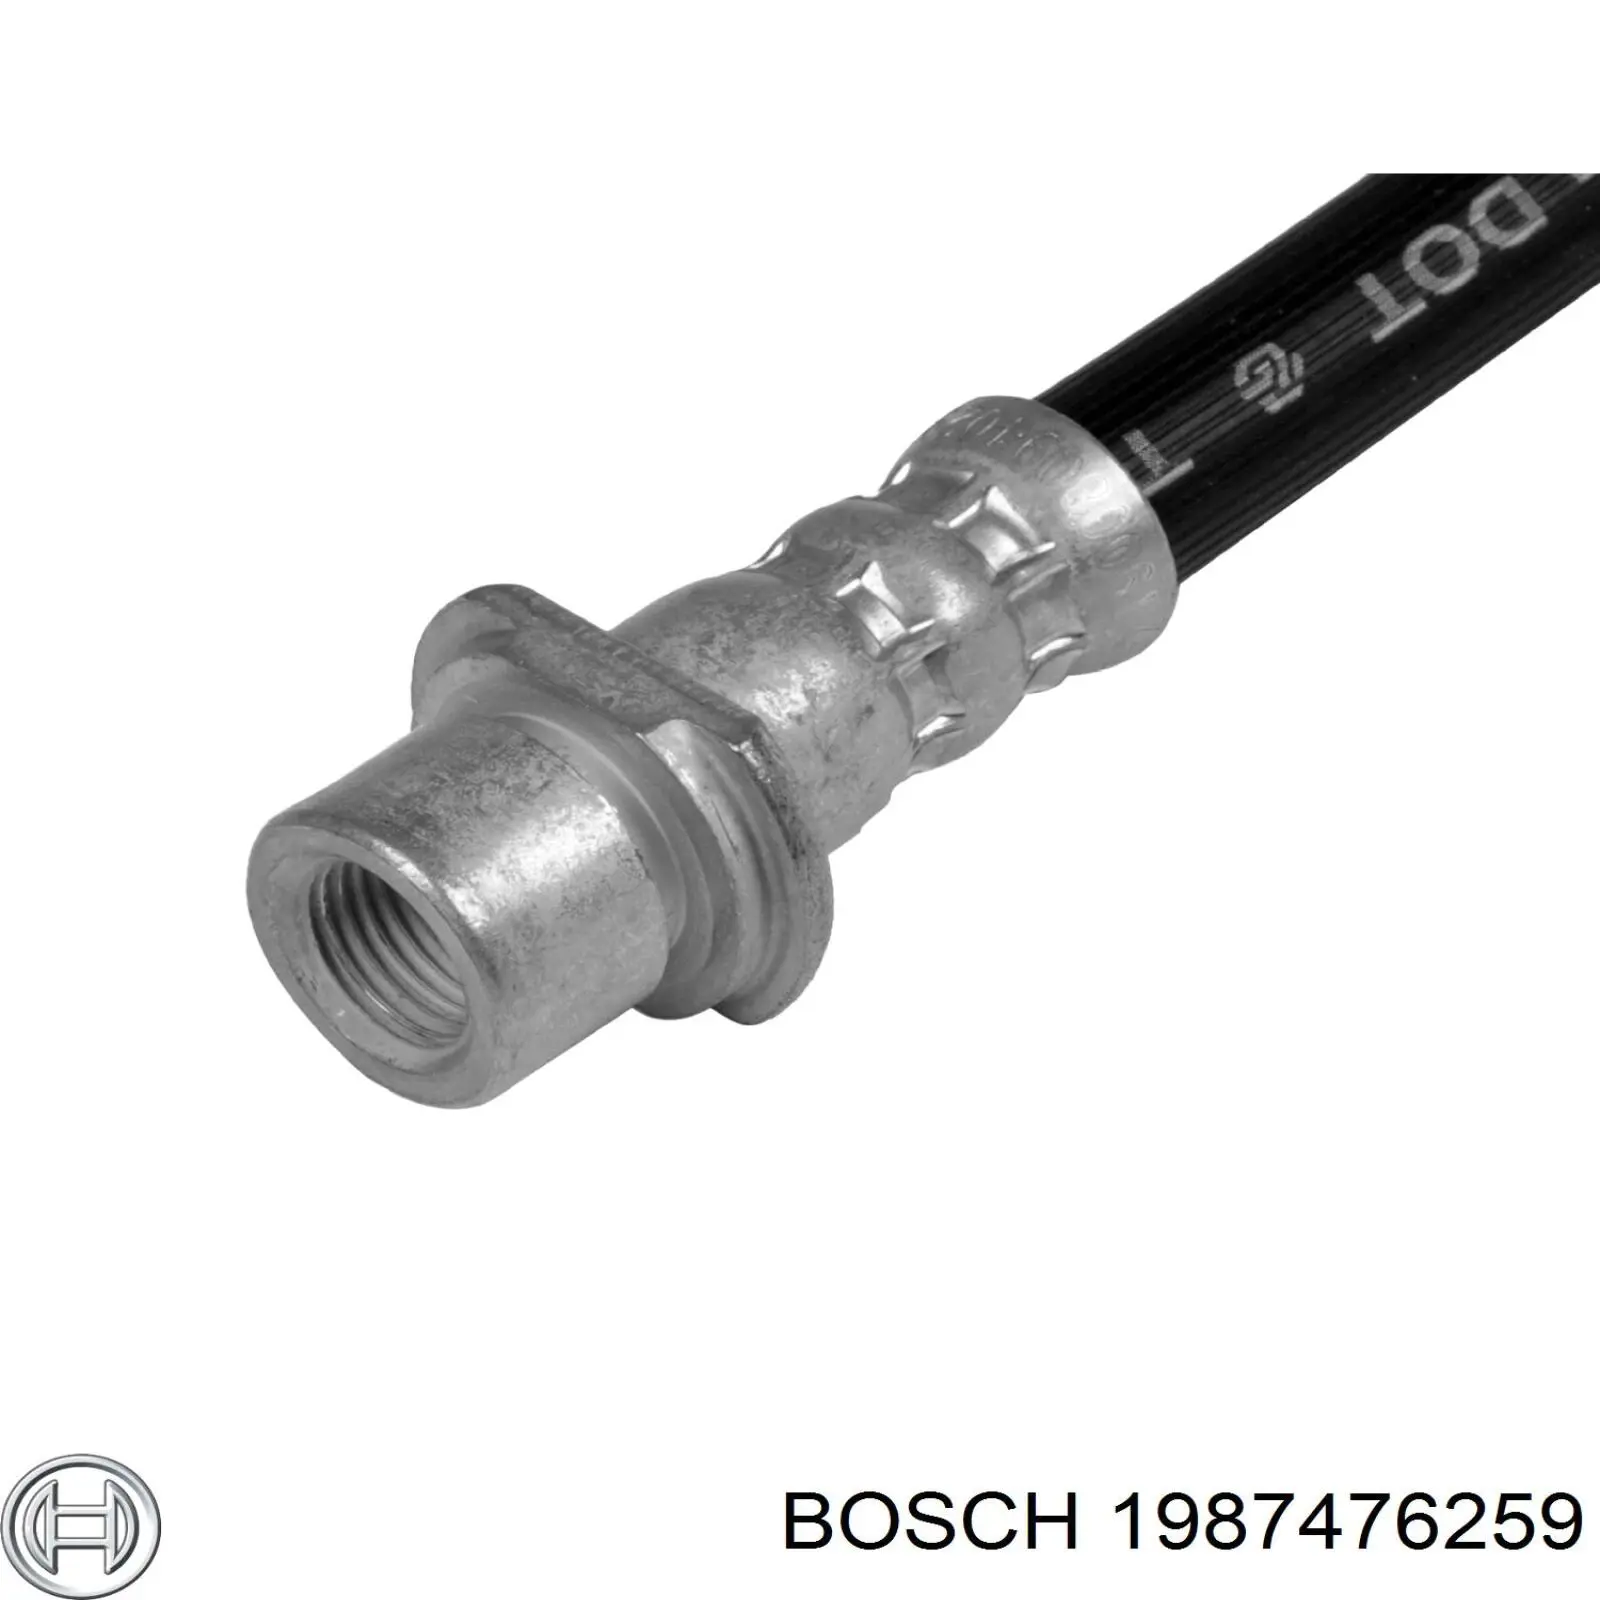 1987476259 Bosch latiguillo de freno trasero